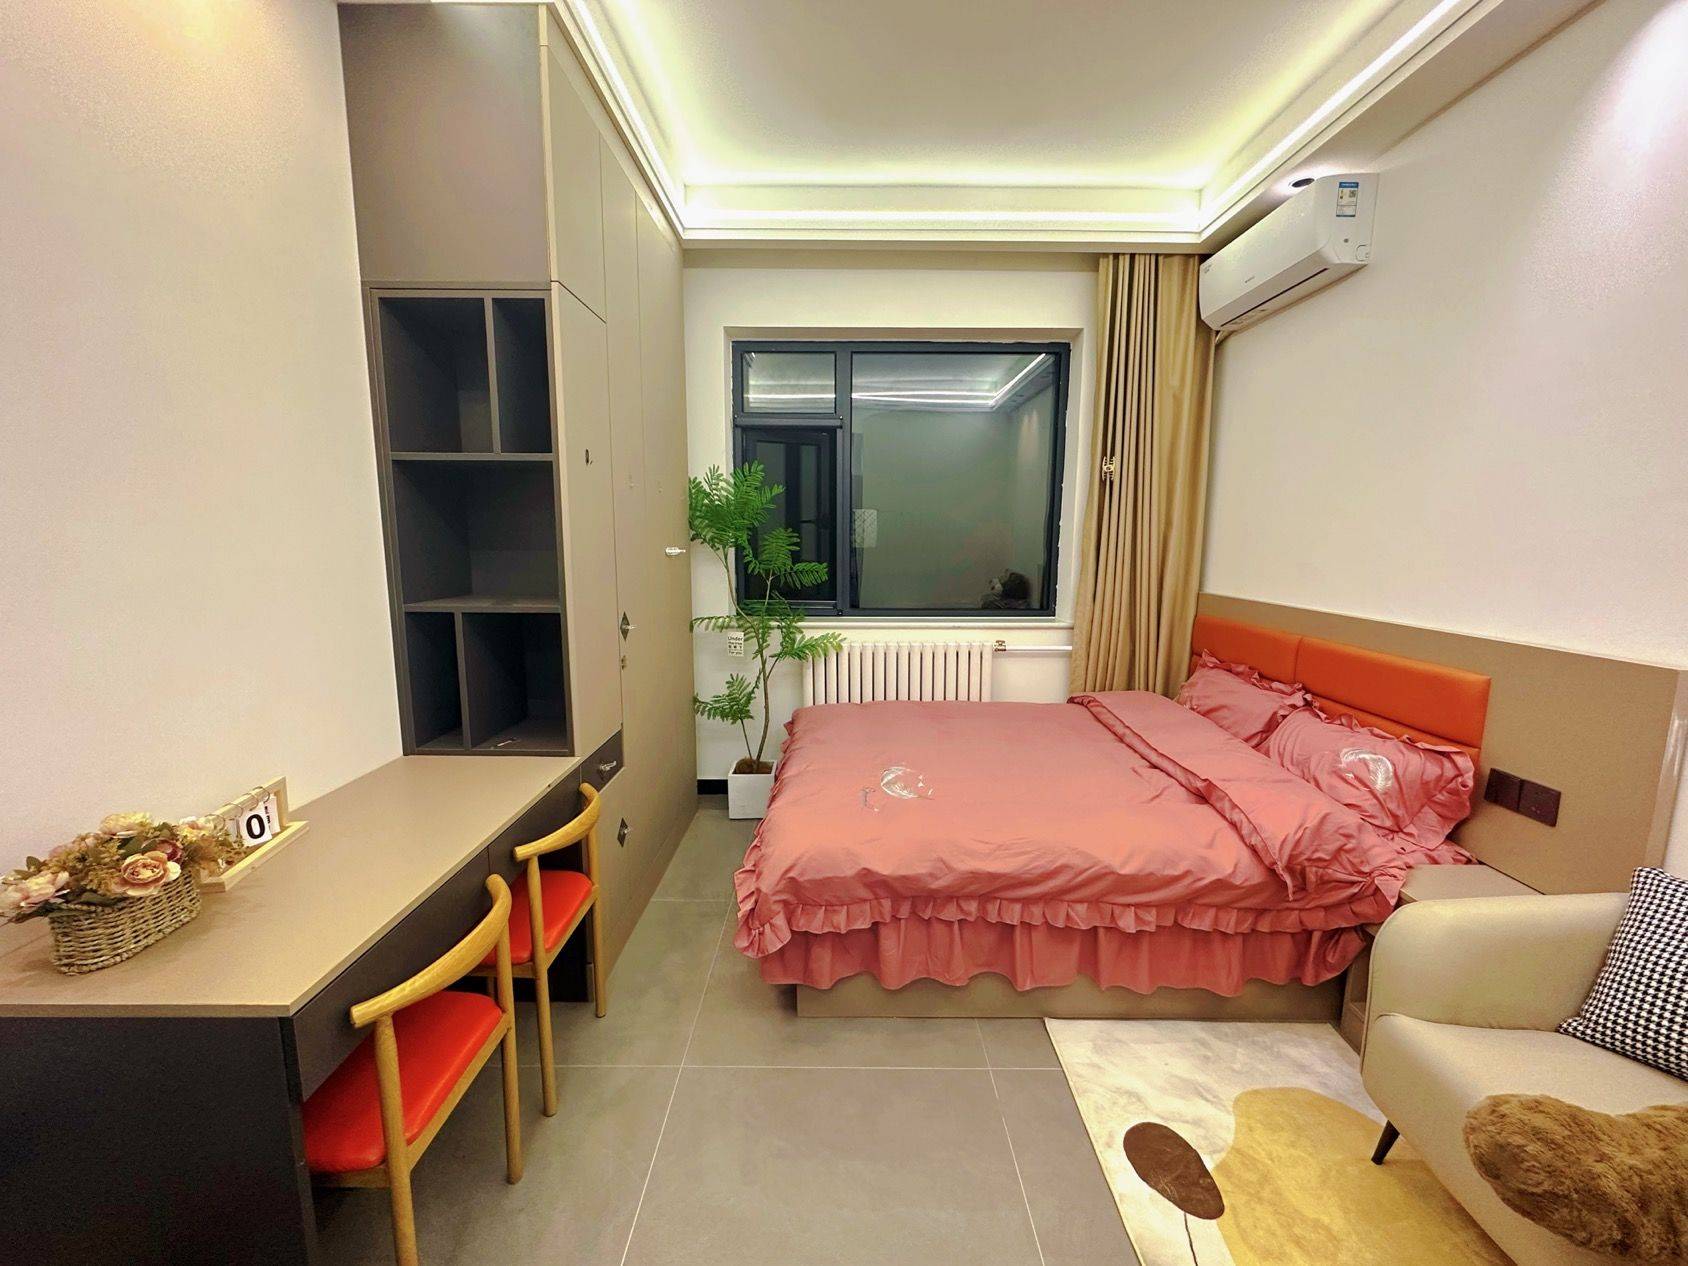 Beijing-Fengtai-Cozy Home,Clean&Comfy,No Gender Limit,“Friends”,Chilled,LGBTQ Friendly,Pet Friendly